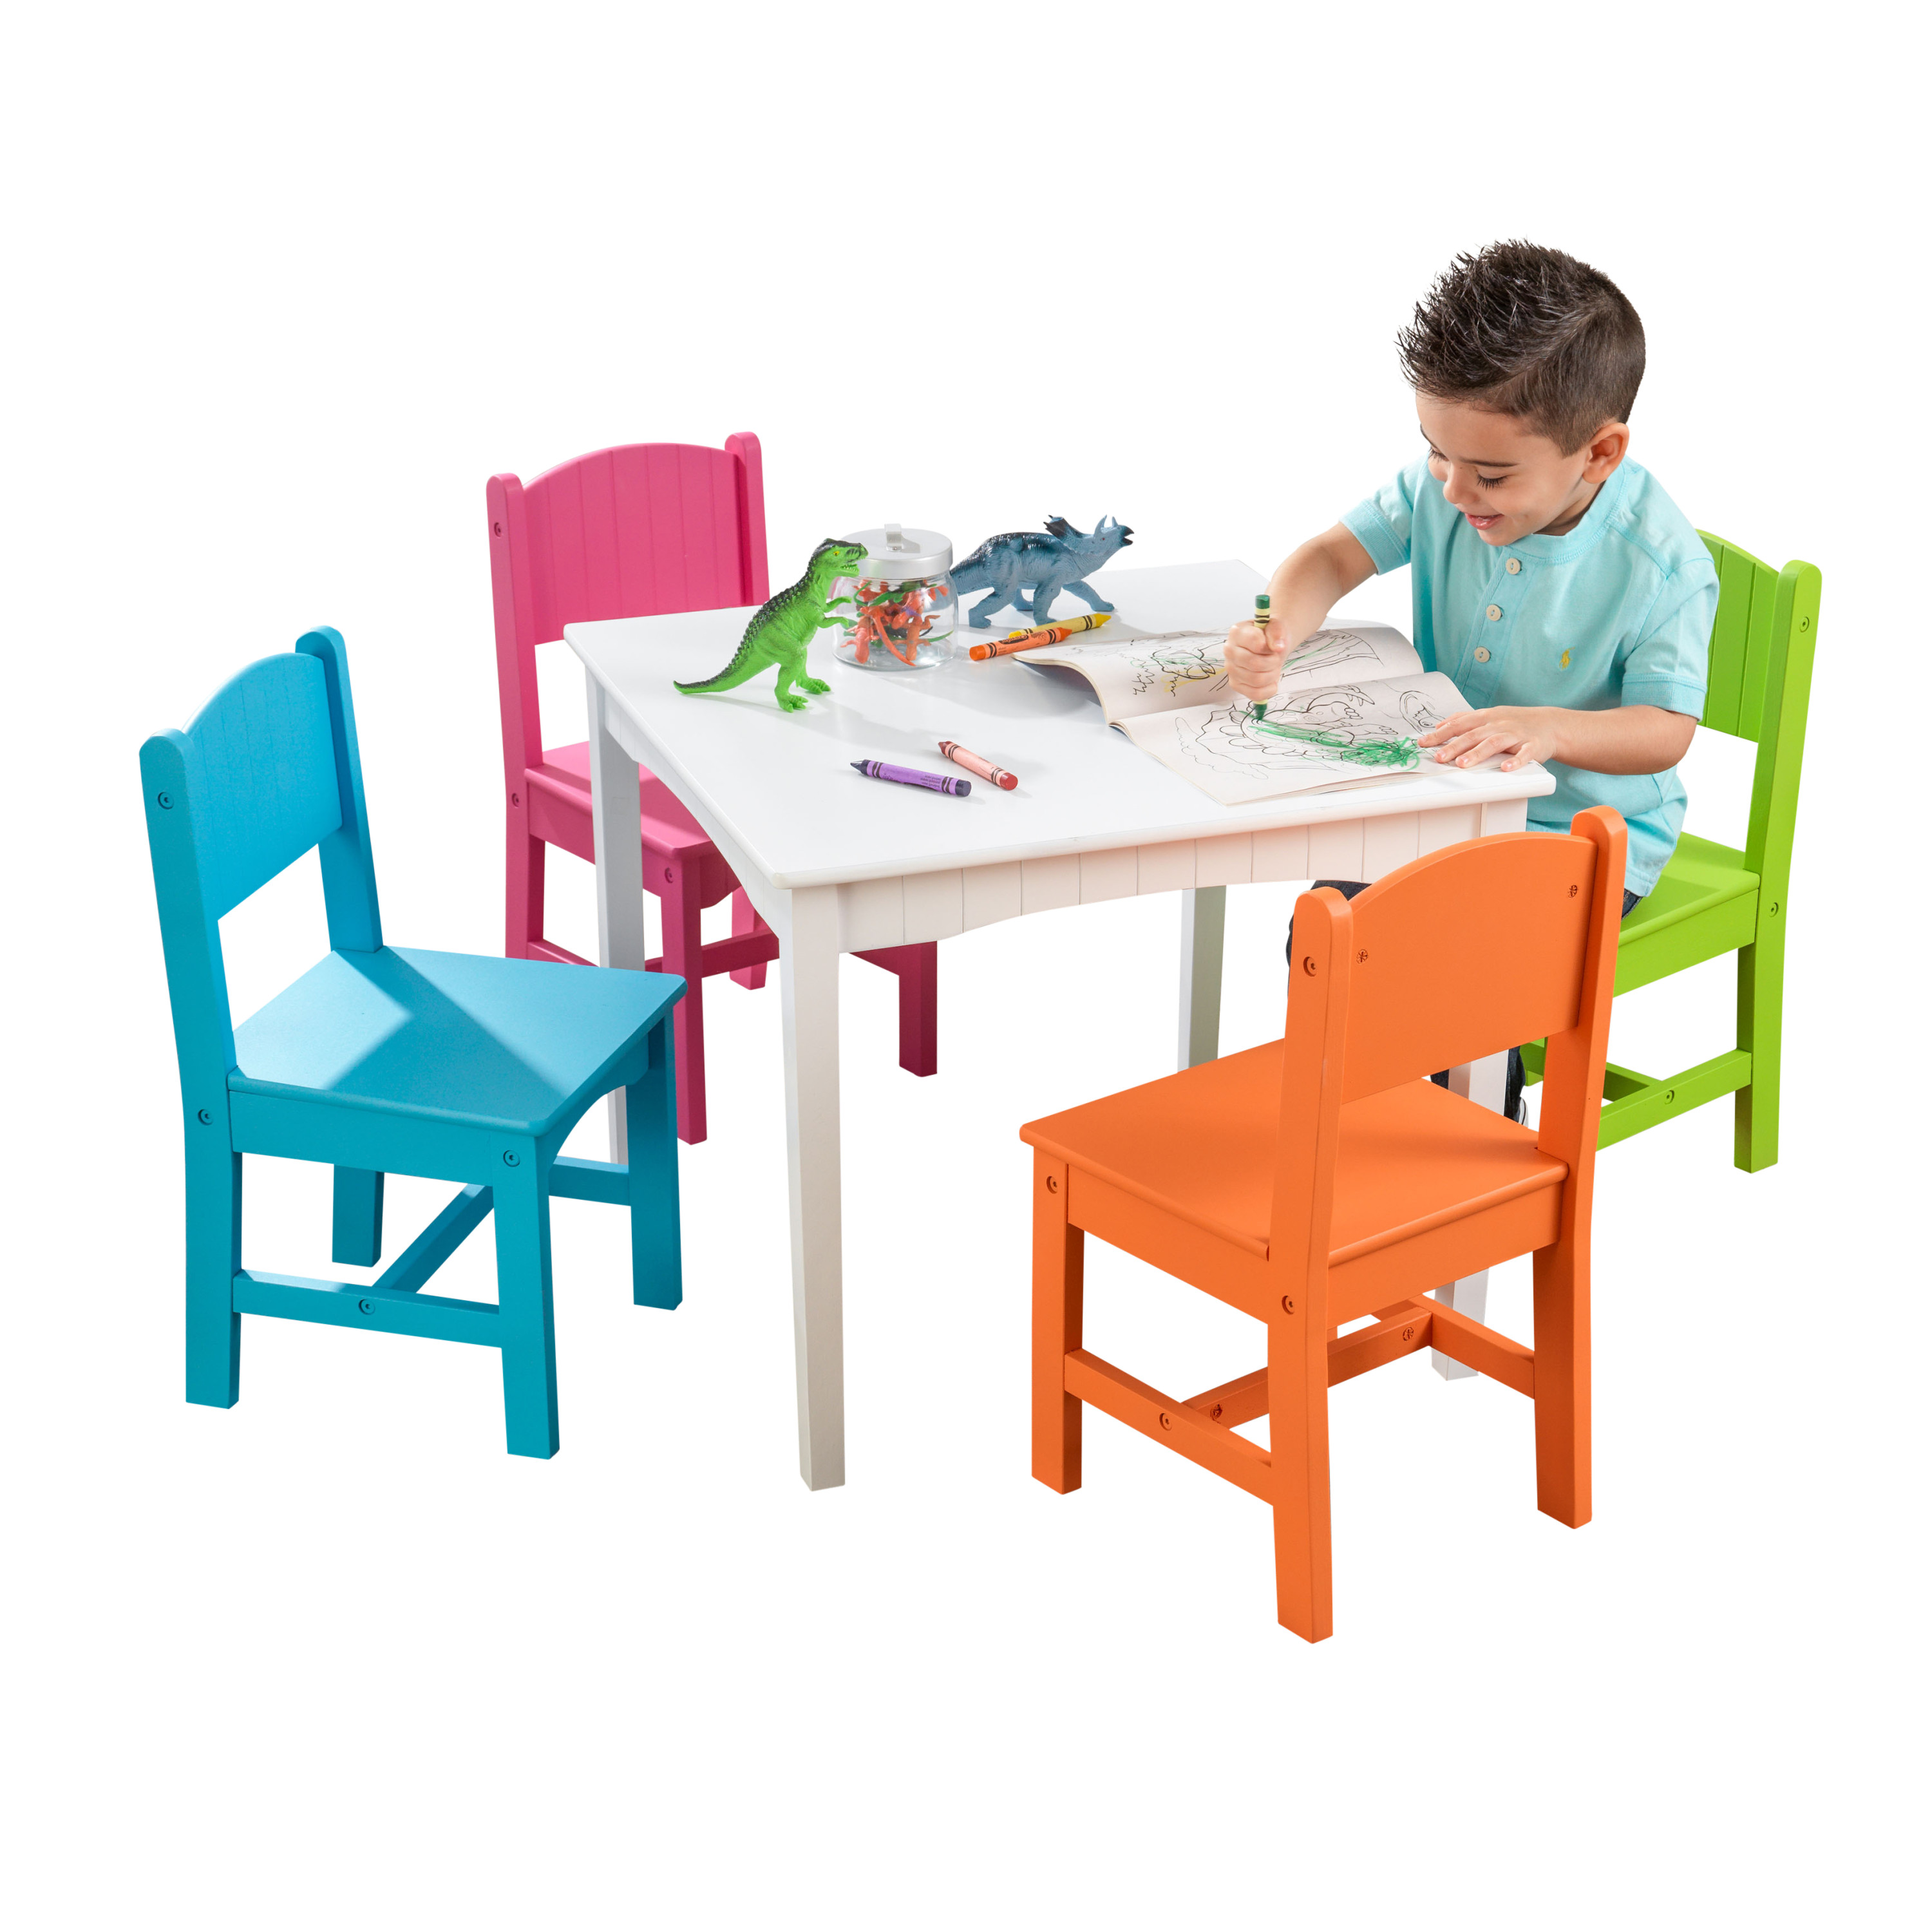 KidKraft Nantucket Table & 4 Chair Set, Bright - image 1 of 6